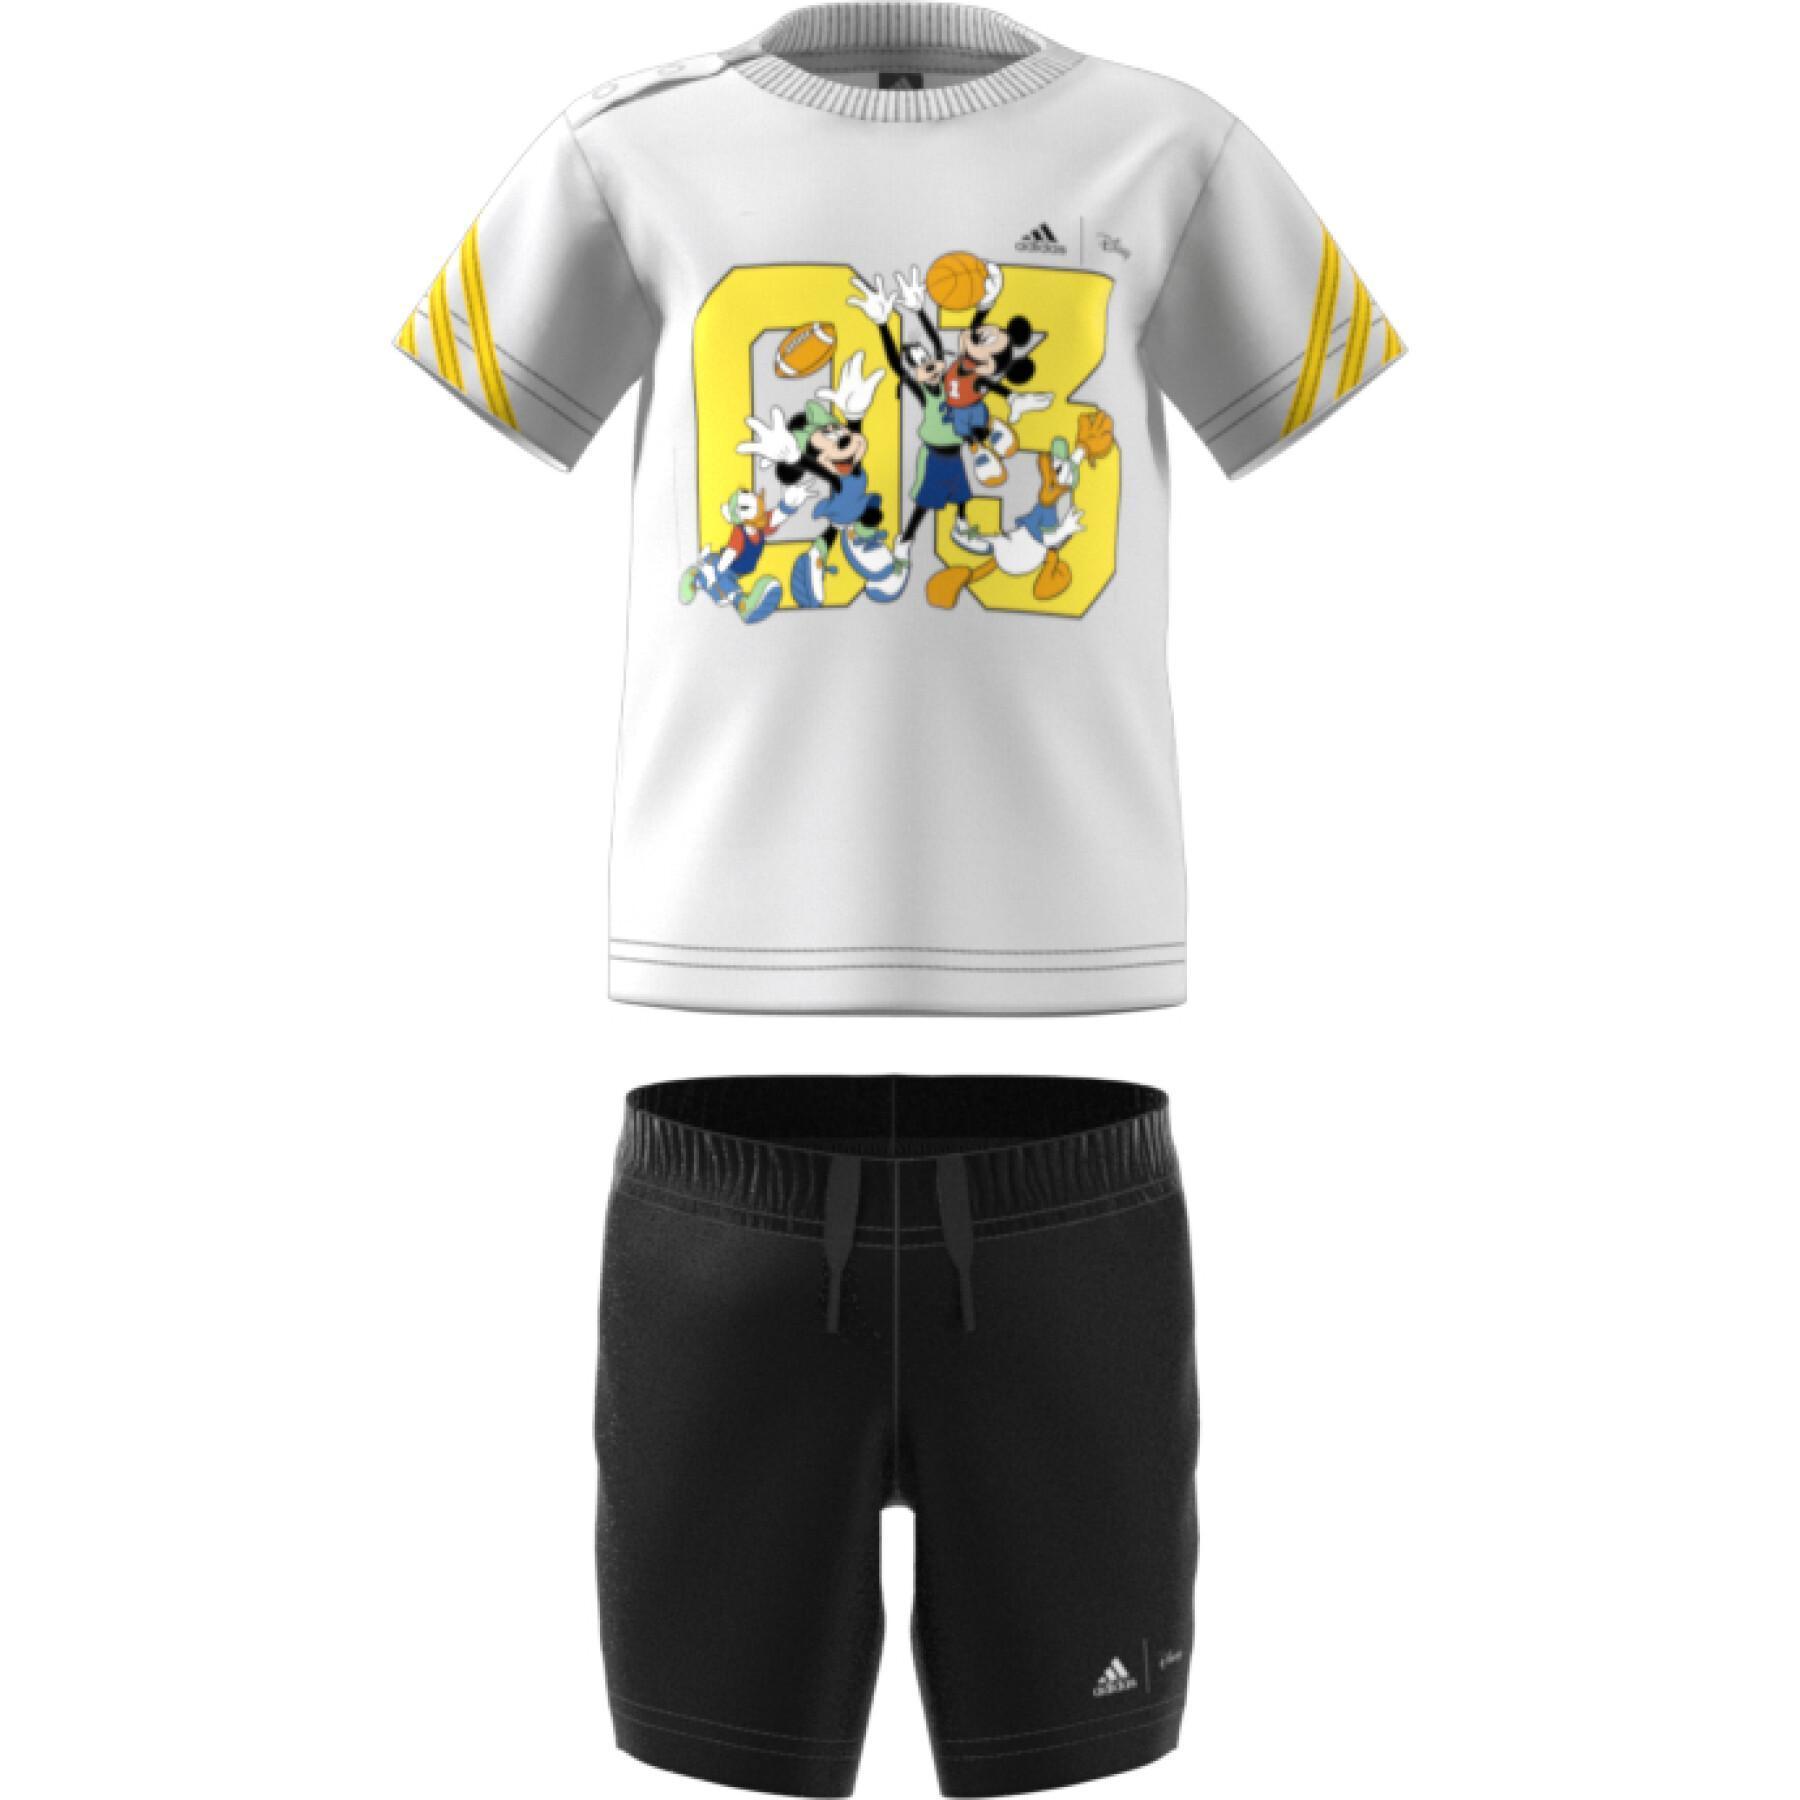 Completo sportivo per bambini Adidas Disney Mickey Mouse